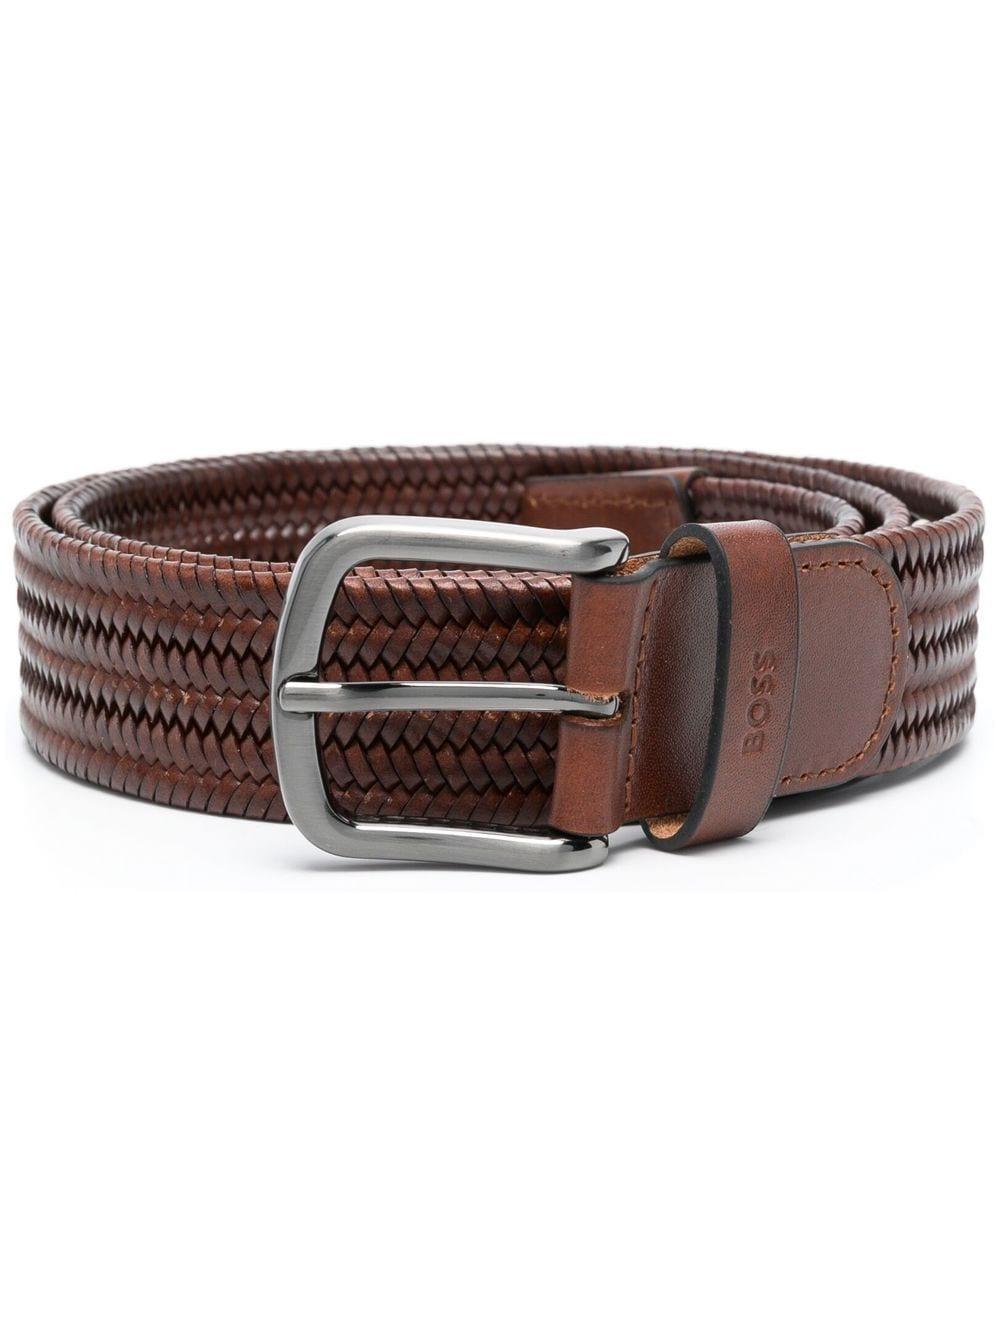 BOSS by HUGO BOSS Woven Leather Belt in Brown for Men | Lyst